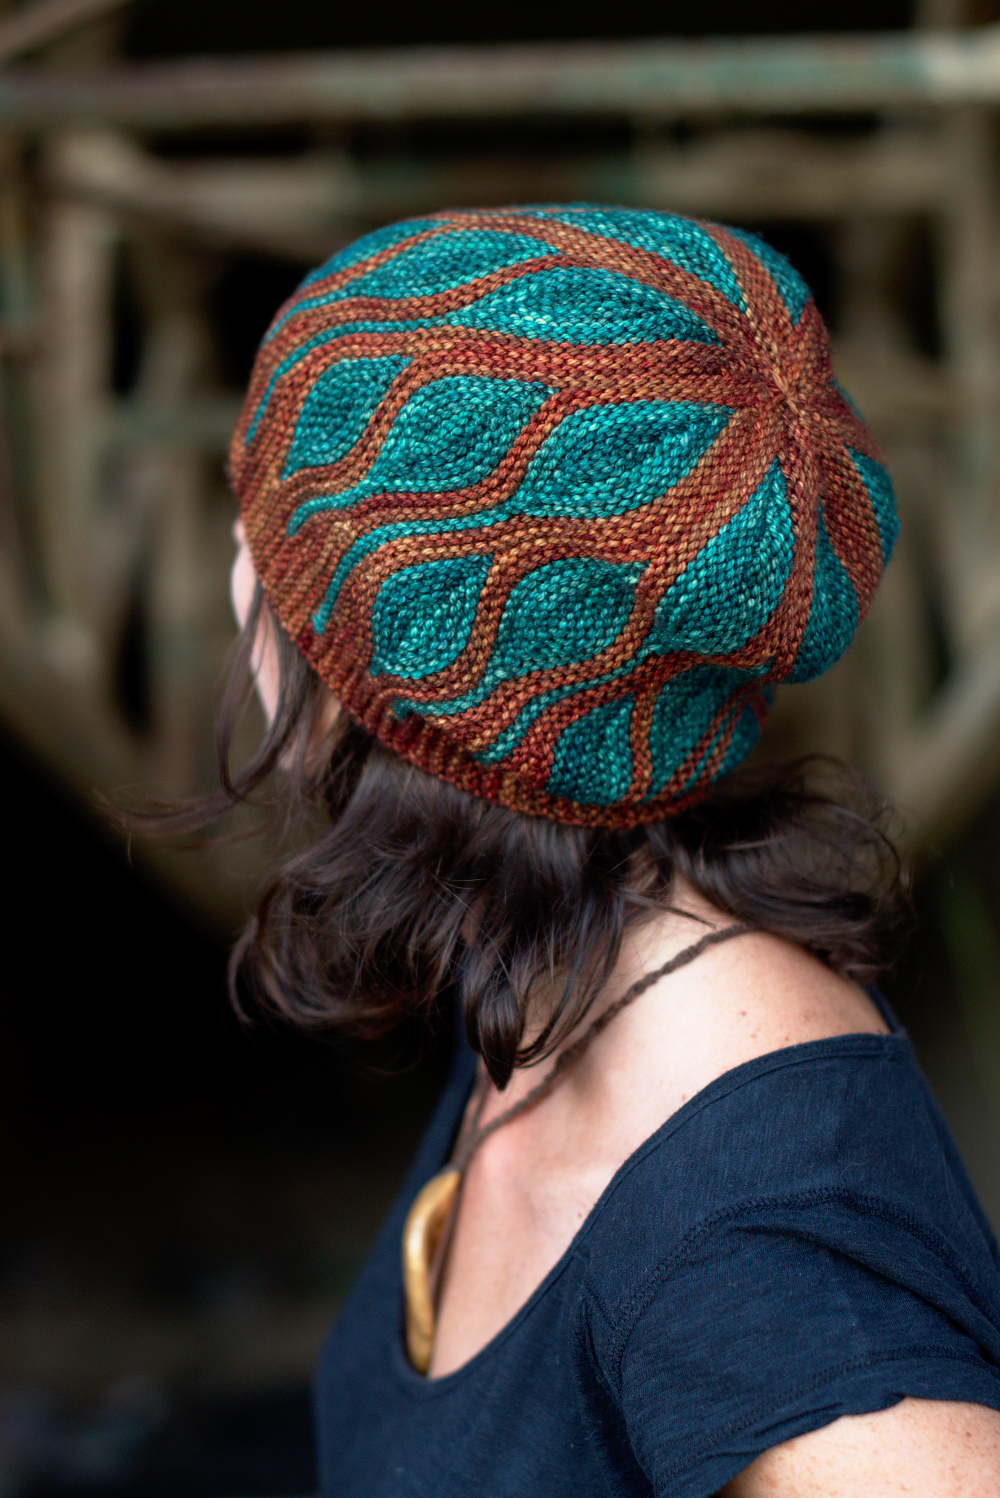 Toph sideways knit short row colourwork hand knitted Hat pattern